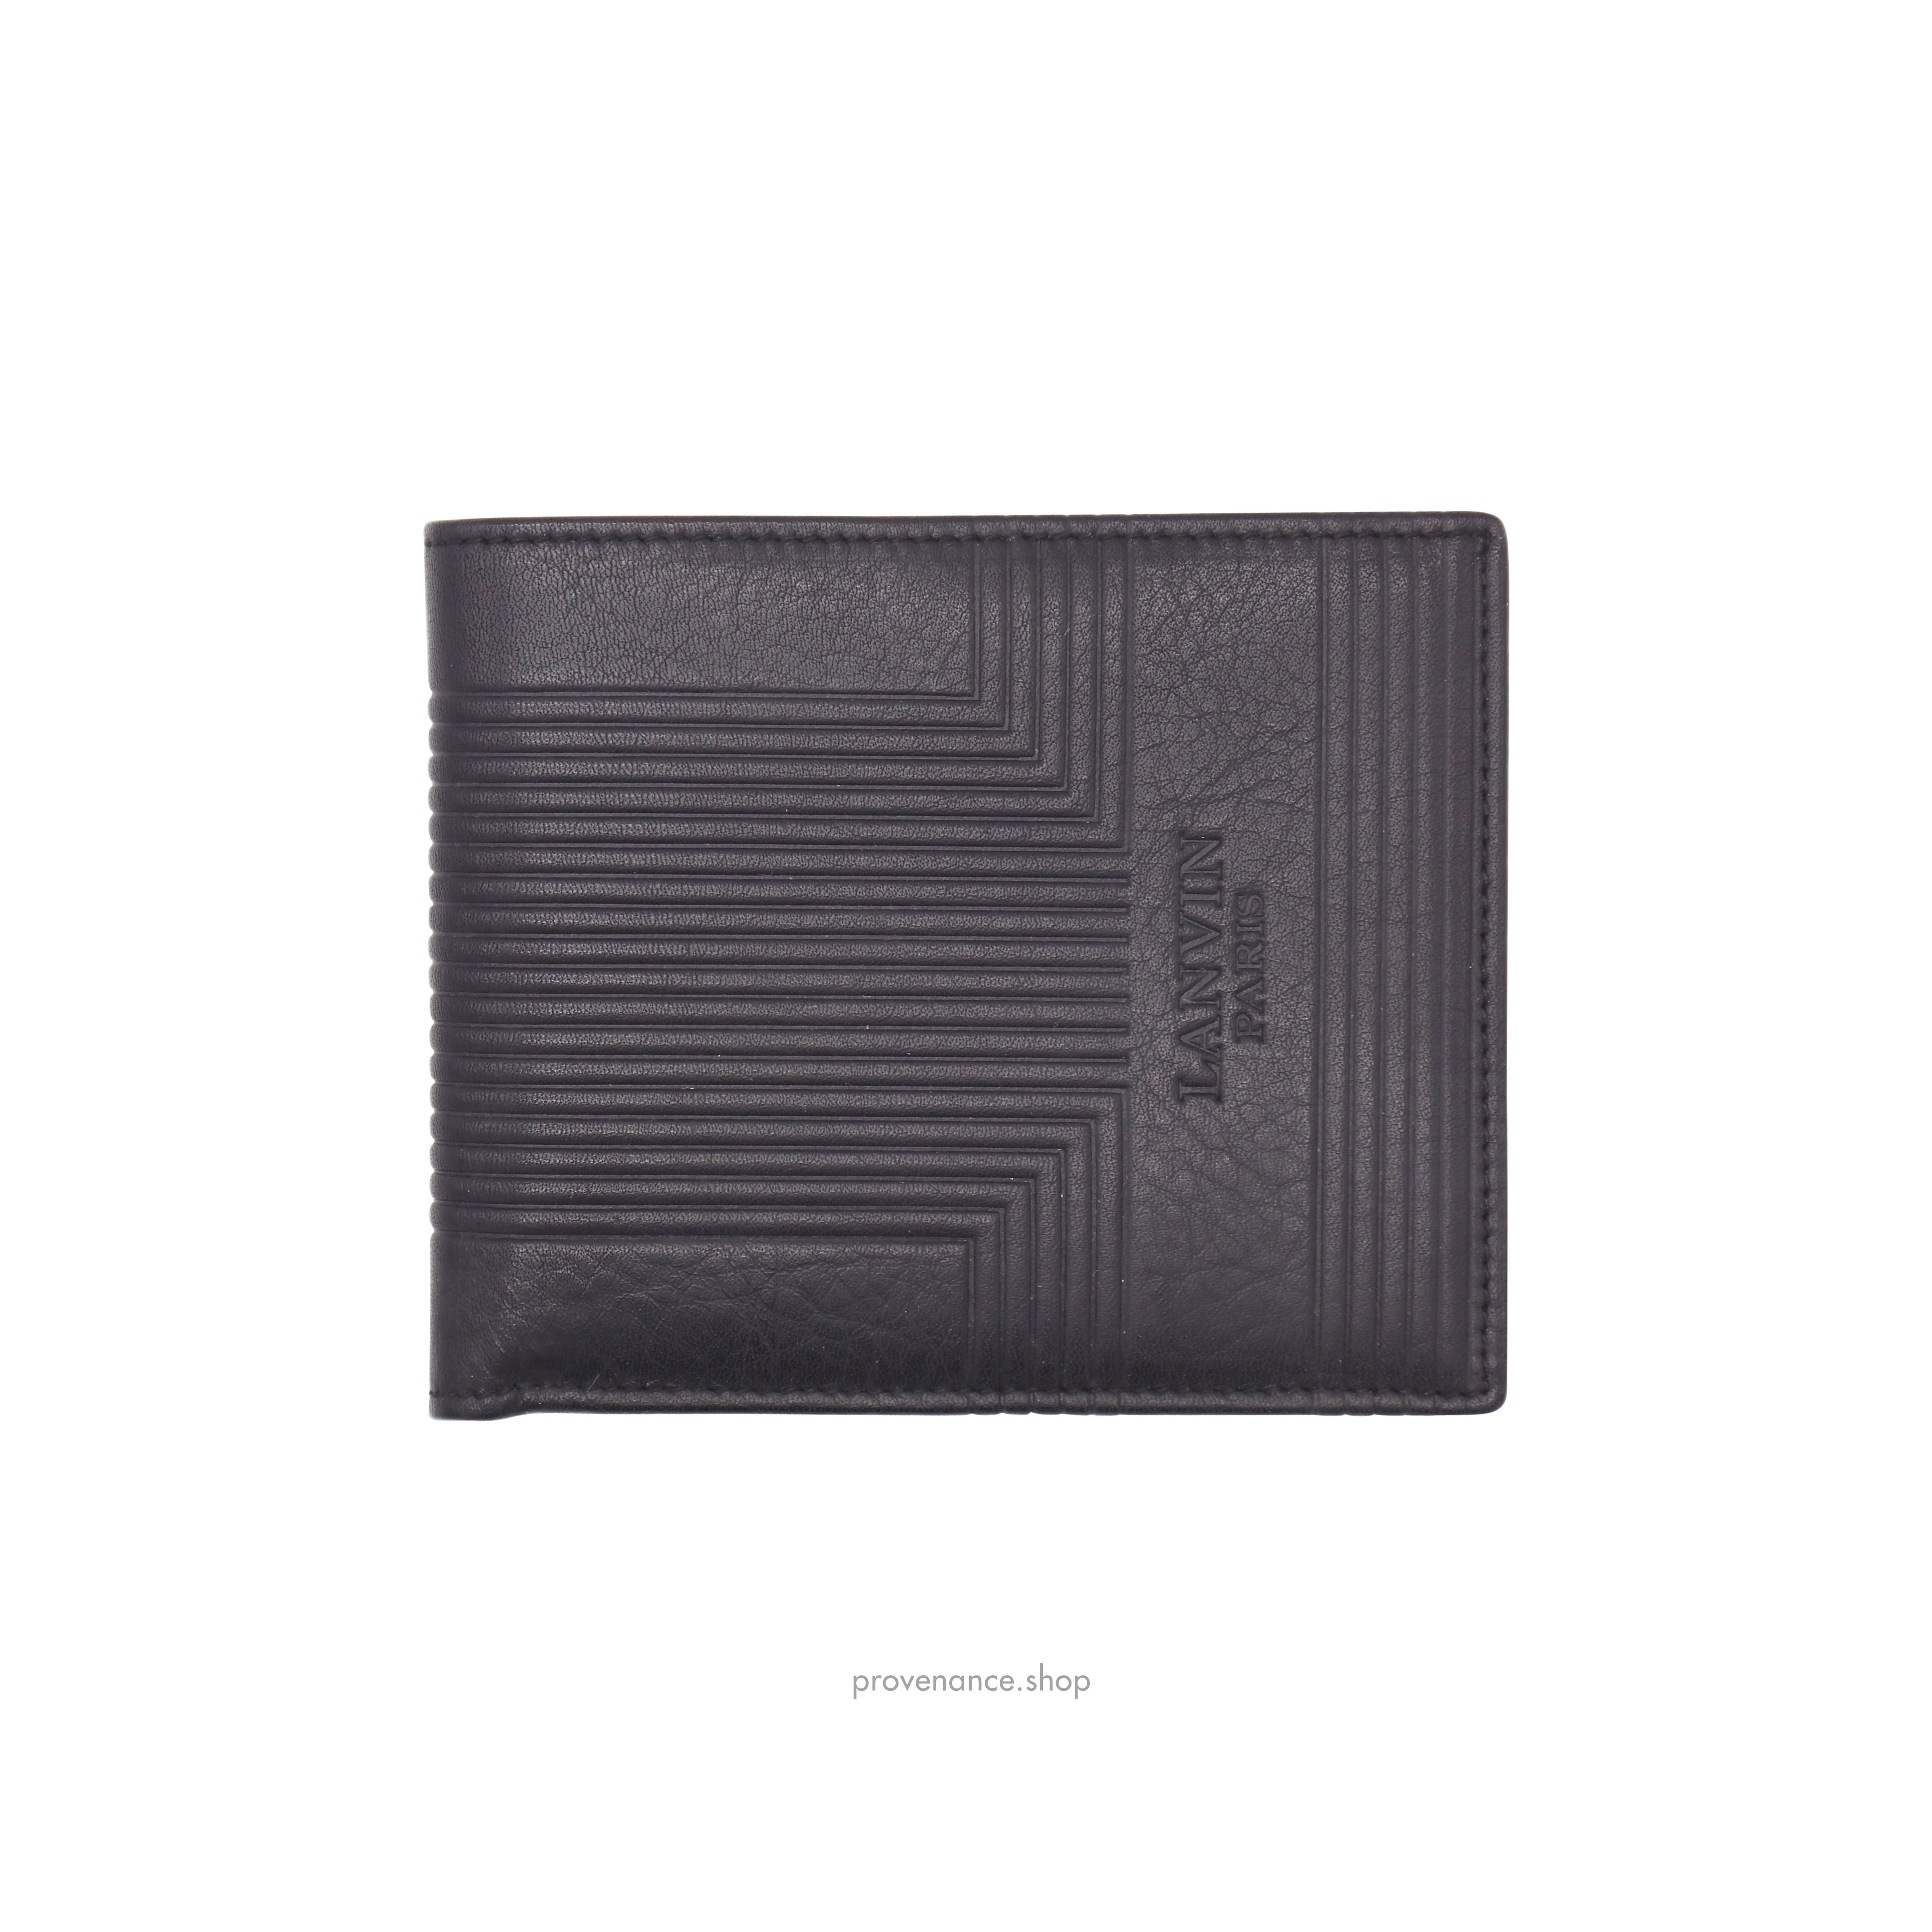 Lanvin Bifold Wallet - Black Leather - 2